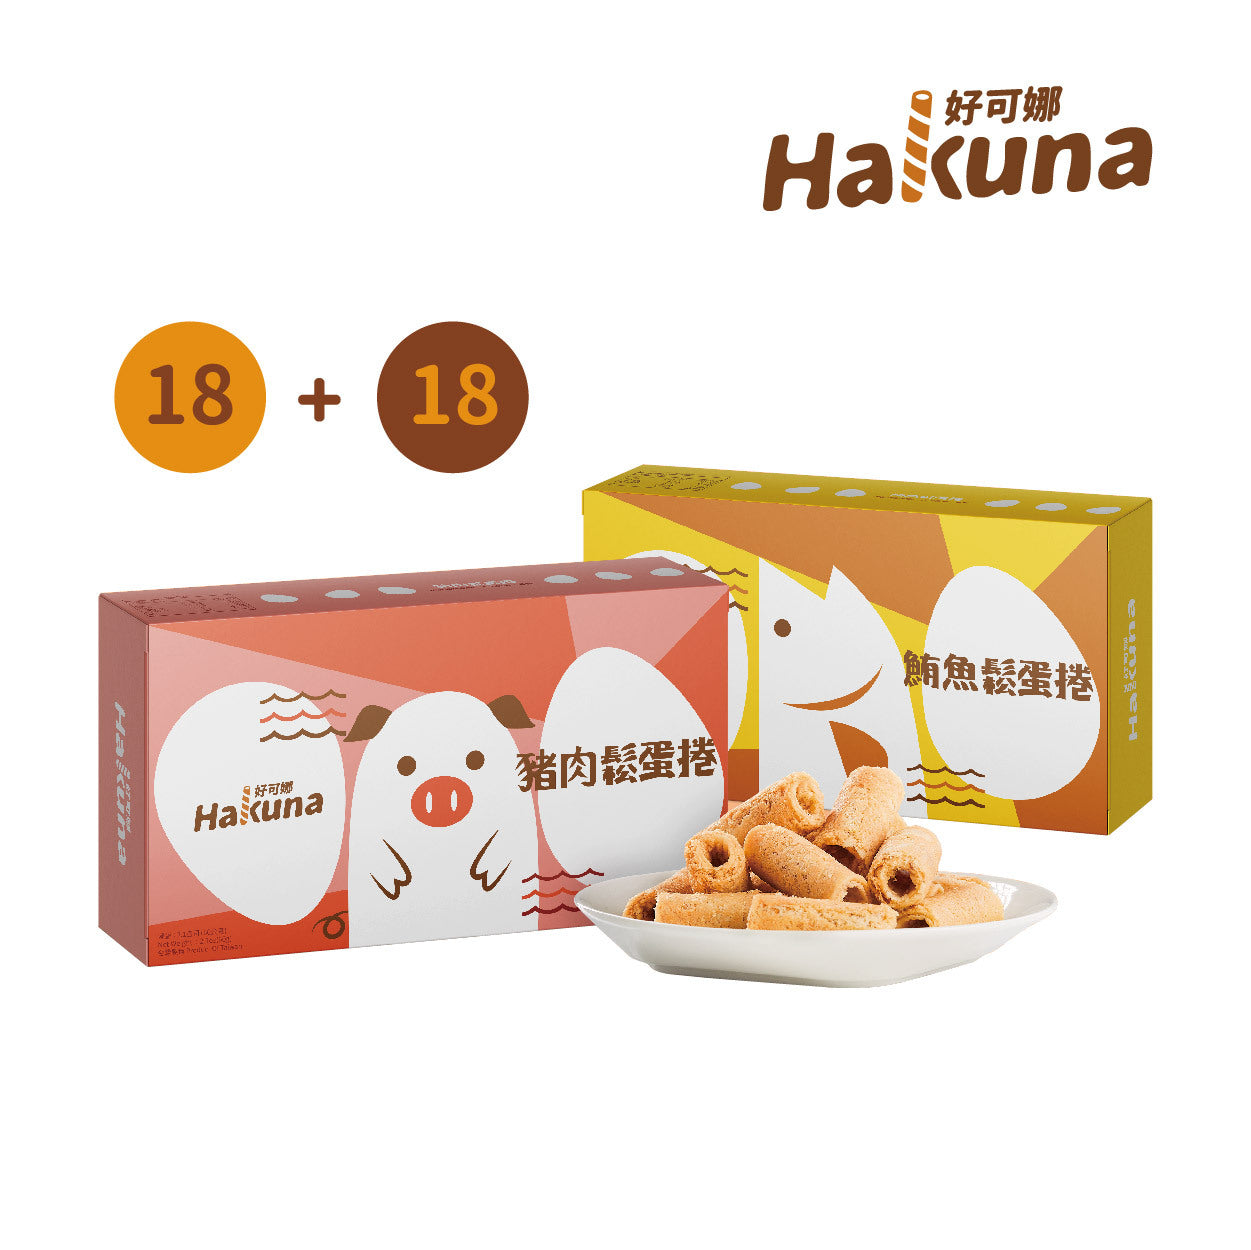 【Hakuna】Hakuna Egg Roll Mix 36 pieces (9 small pieces/box)